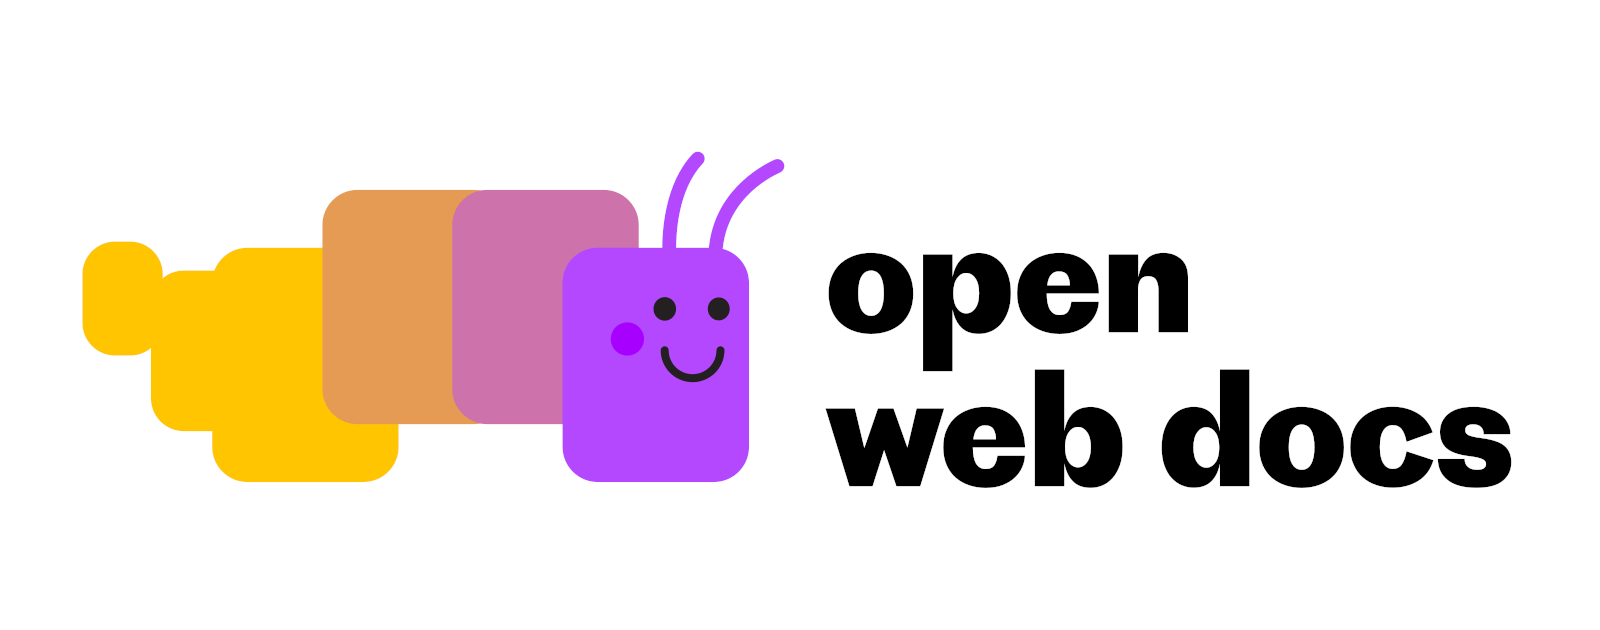 openwebdocs.org image